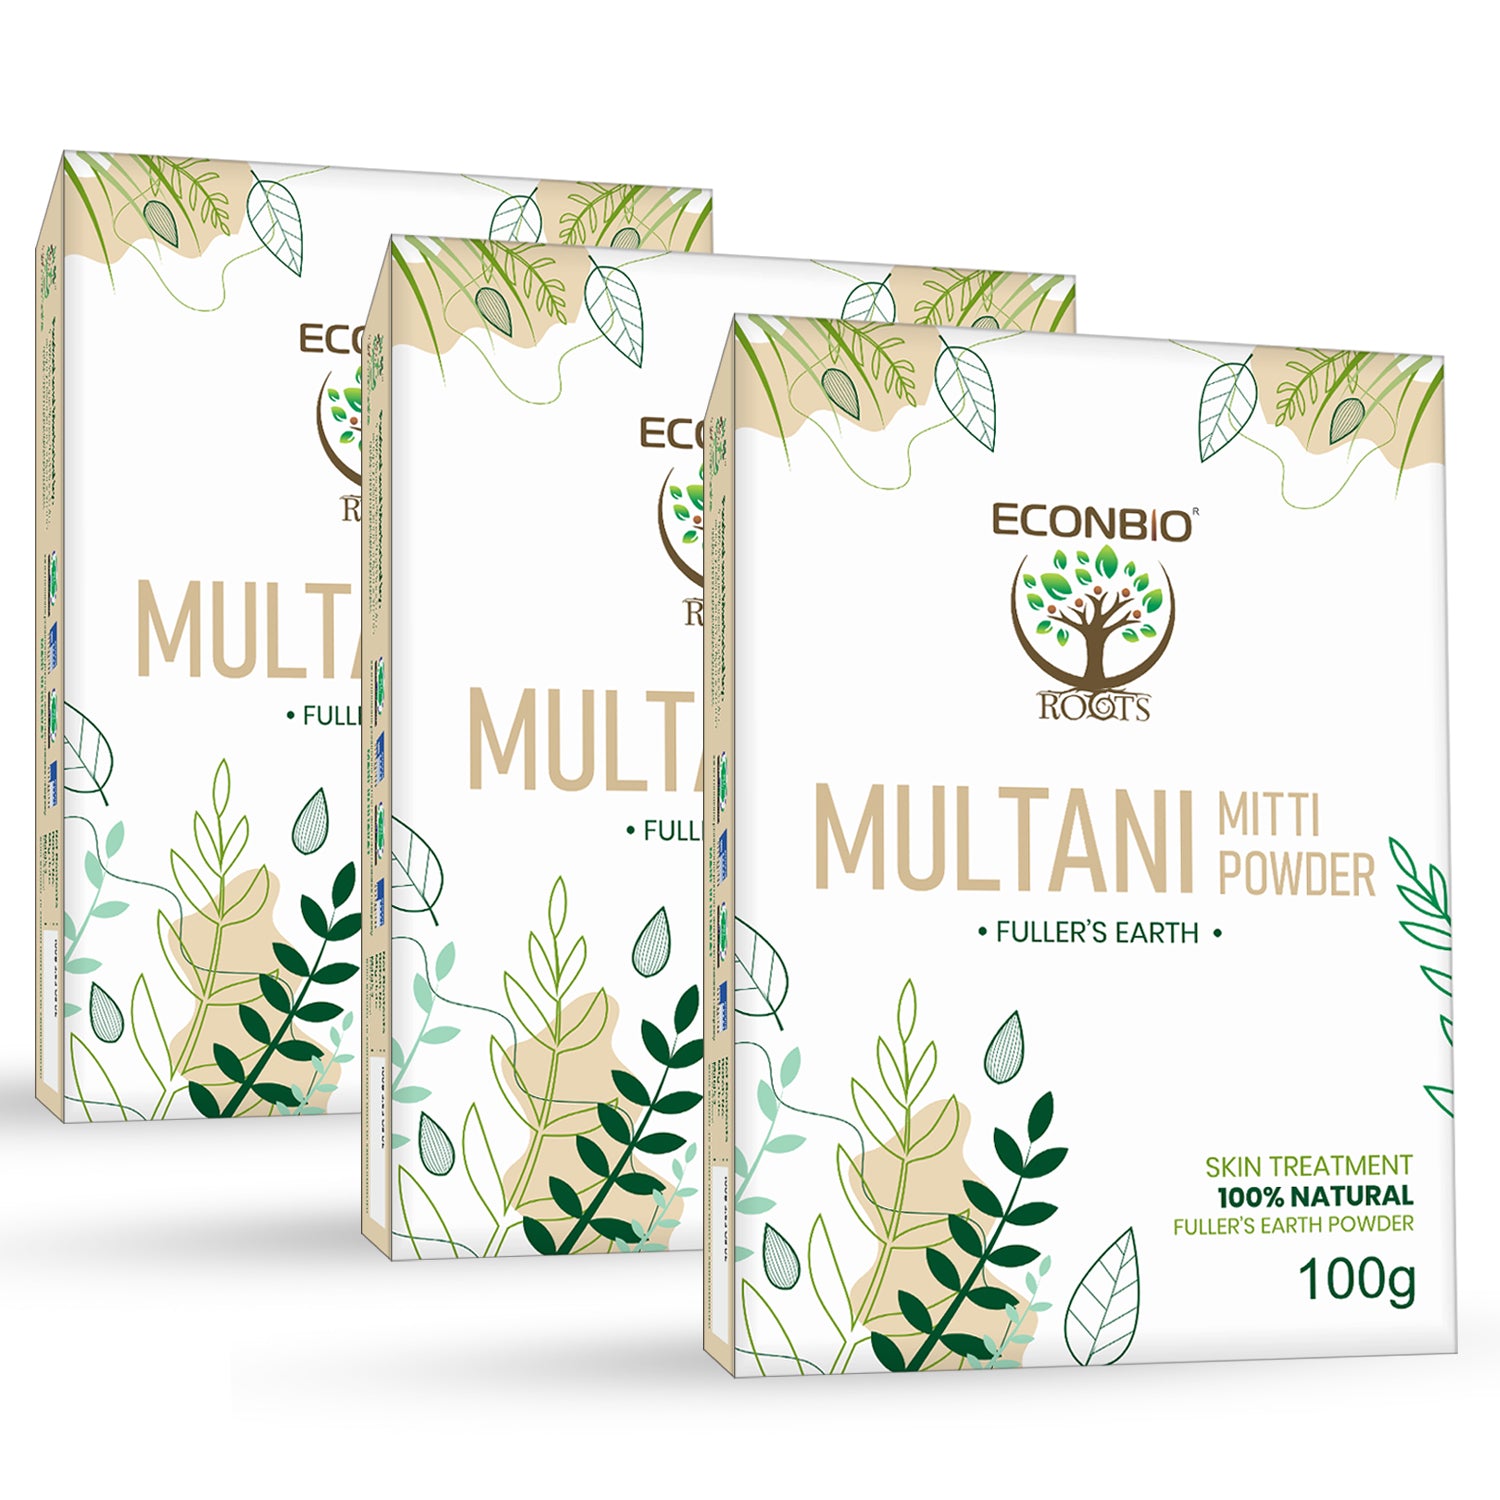 ECONBIO ROOTS Multani Mitti Powder 100g (Pack of 3)